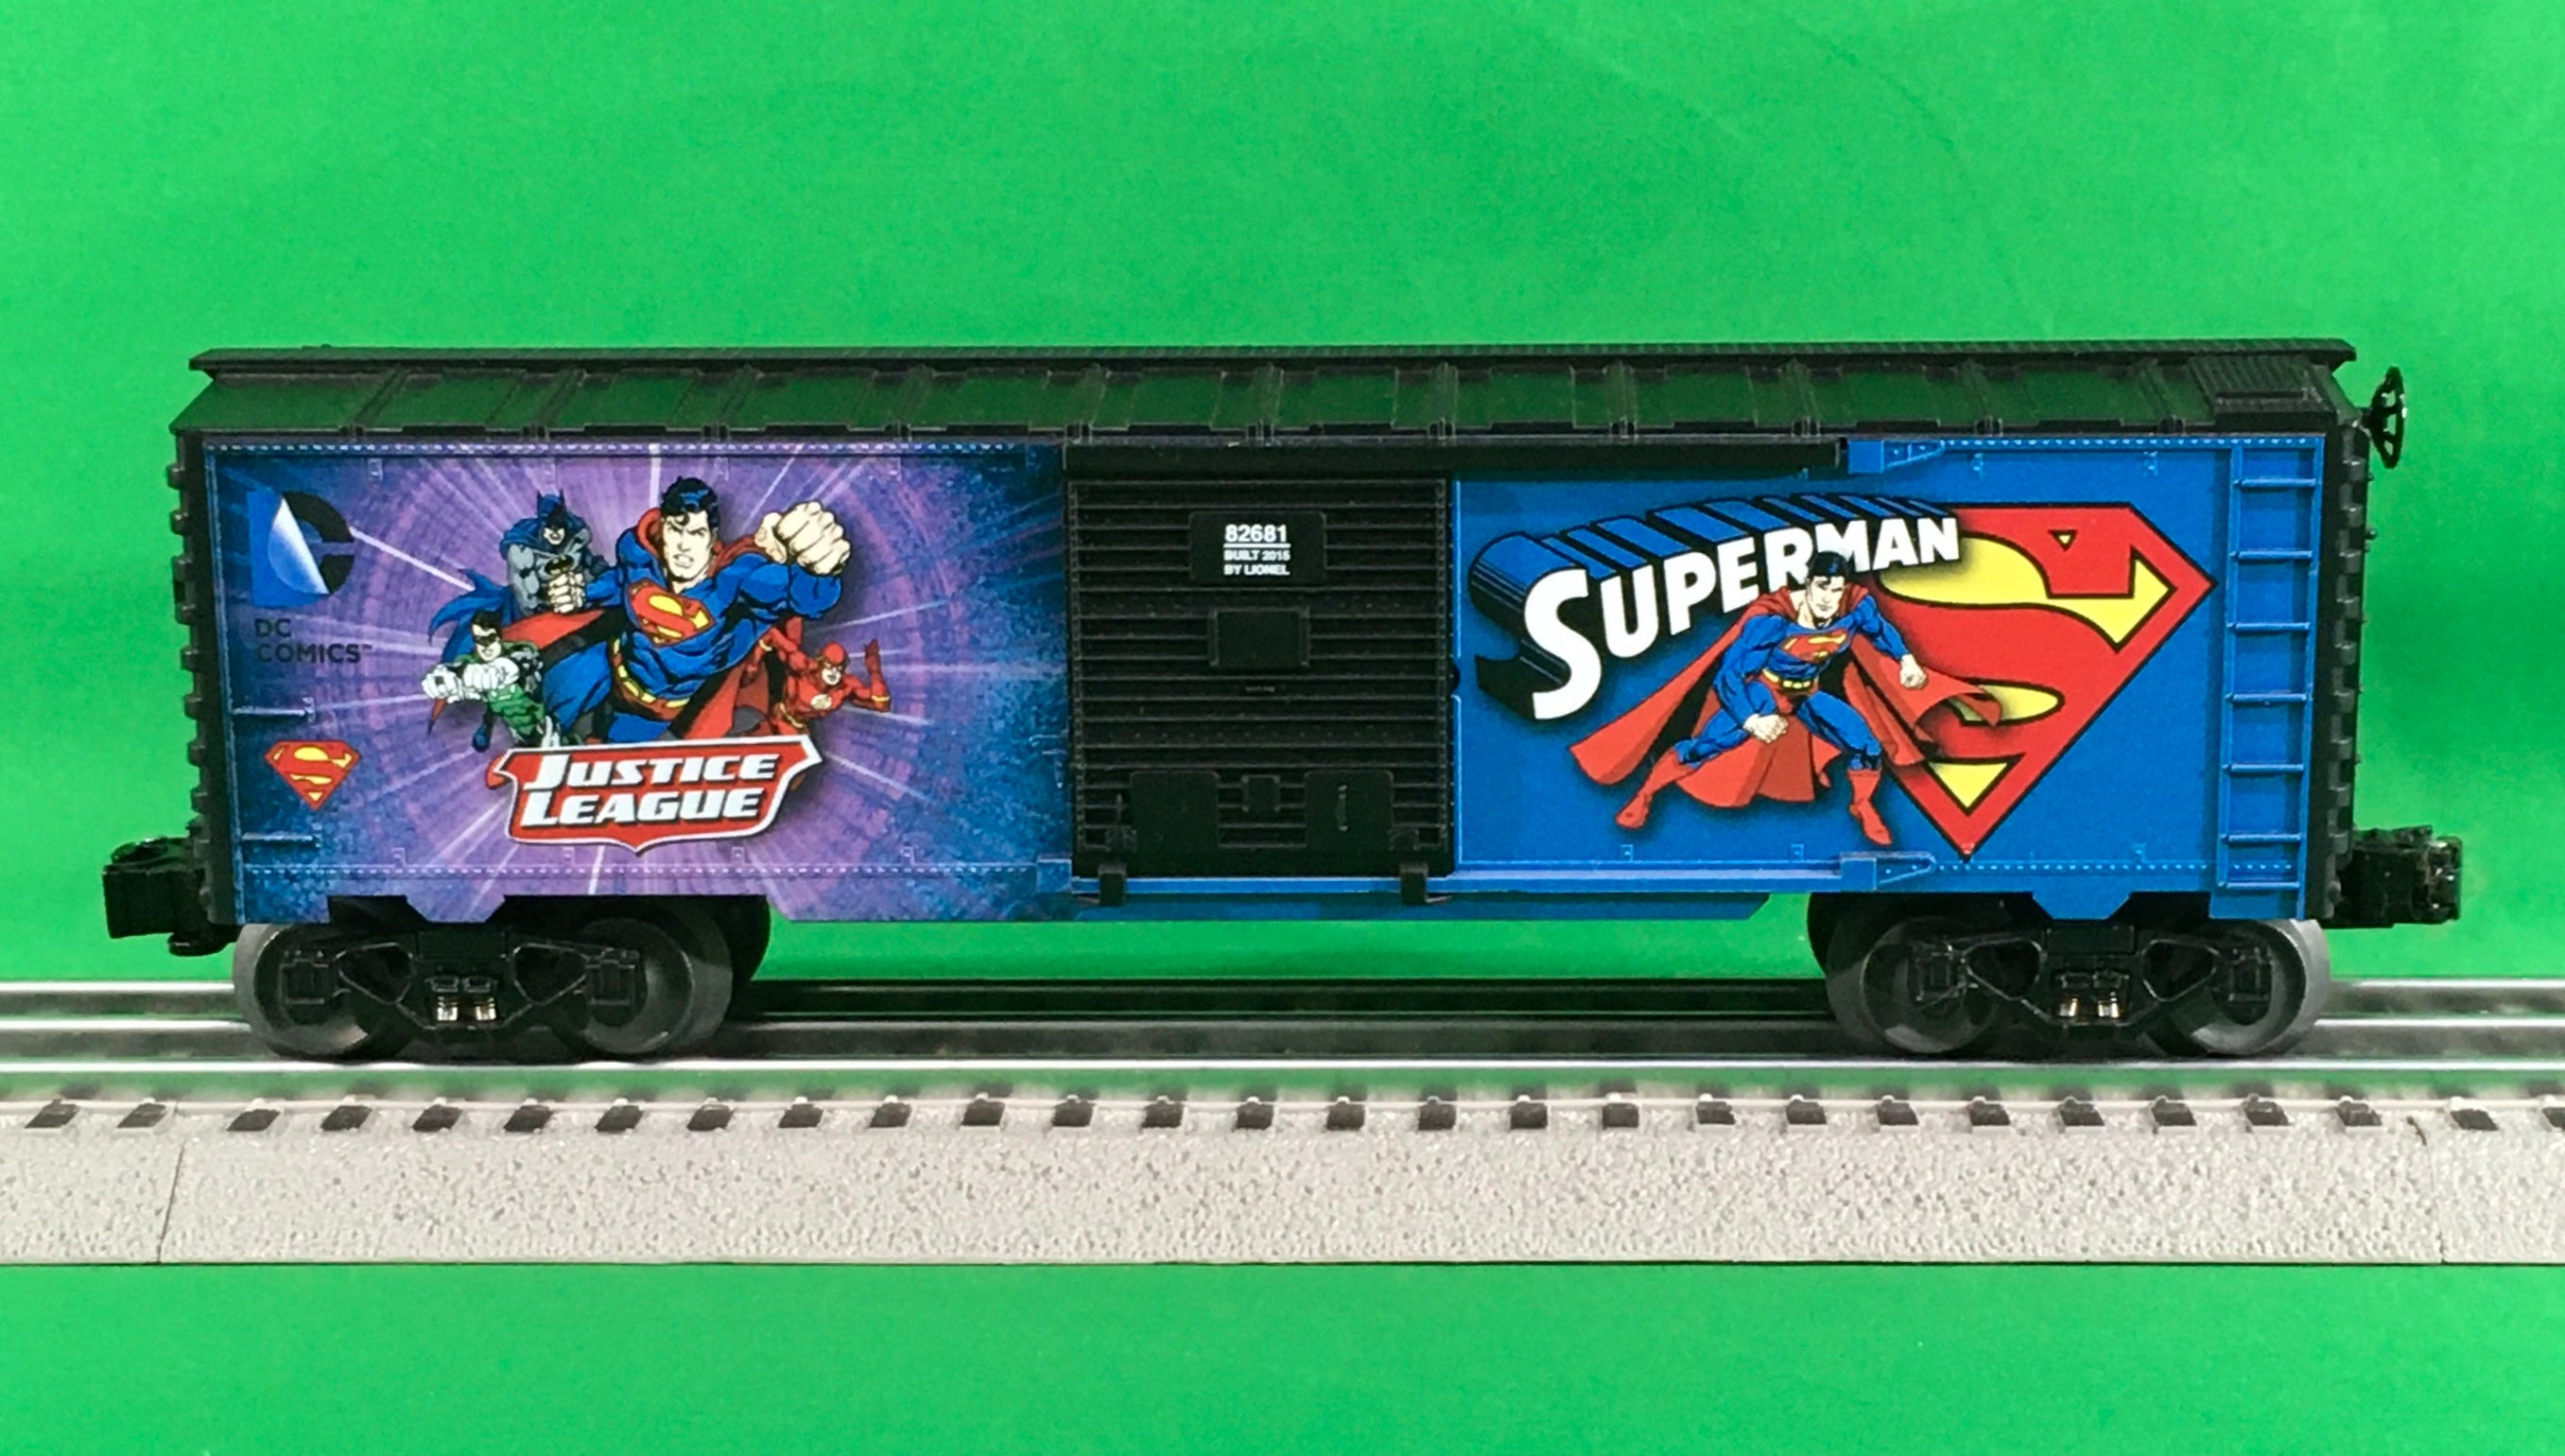 Lionel 6-82684 - DC Comics - Justice League Boxcar "Superman / Green Lantern" (2-Car)